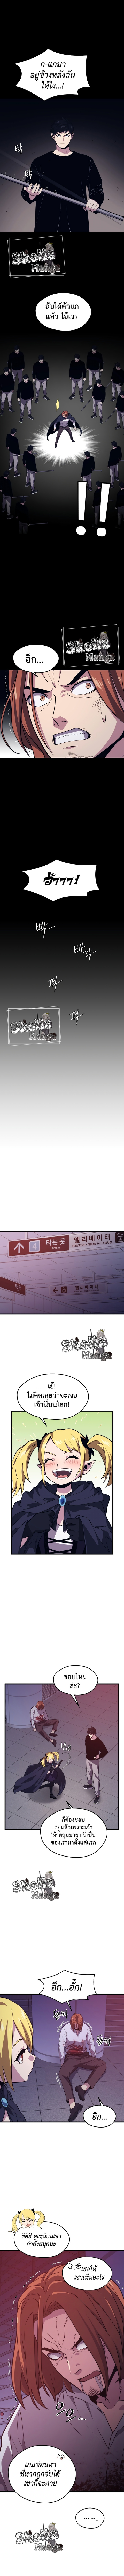 Seoul Station’s Necromancer 66 (4)